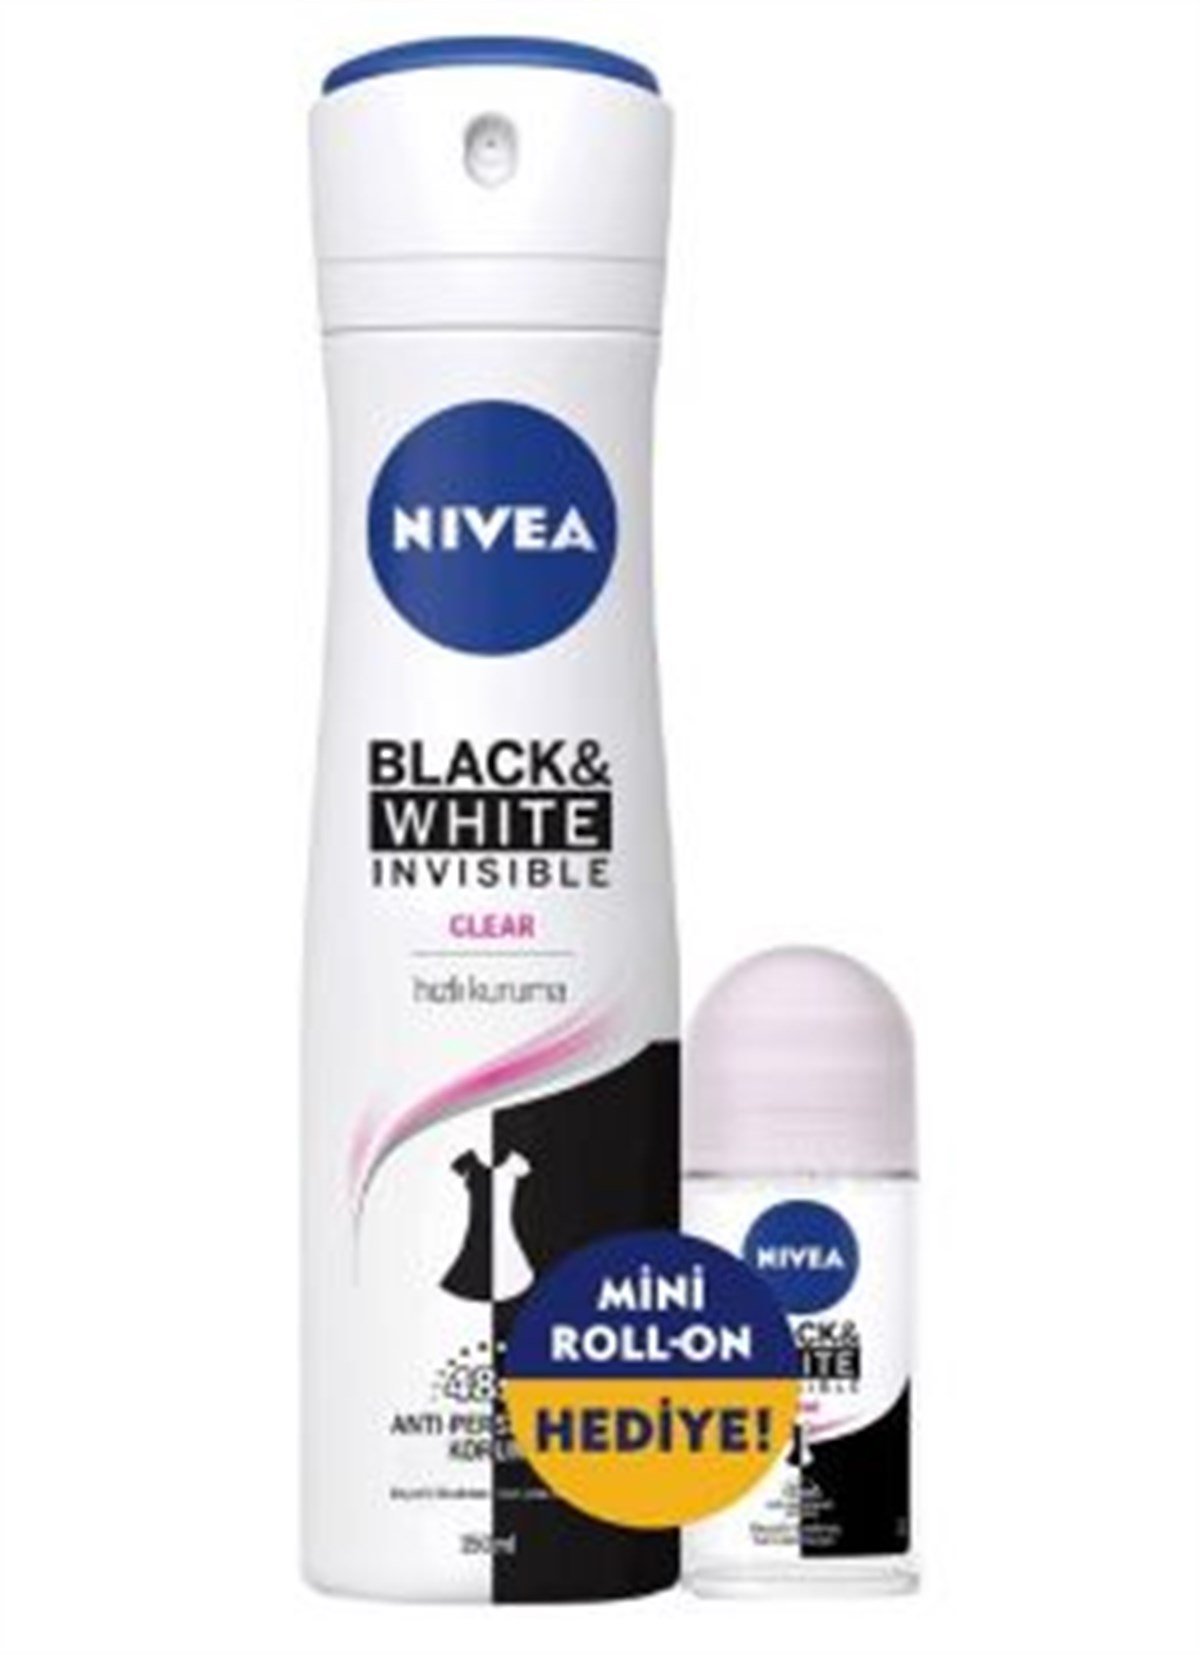 Nivea Invisible Black & White Clear Deo 150 ml.+ Mini Roll-on 25 ml For  Woman-LeylekKapida.com